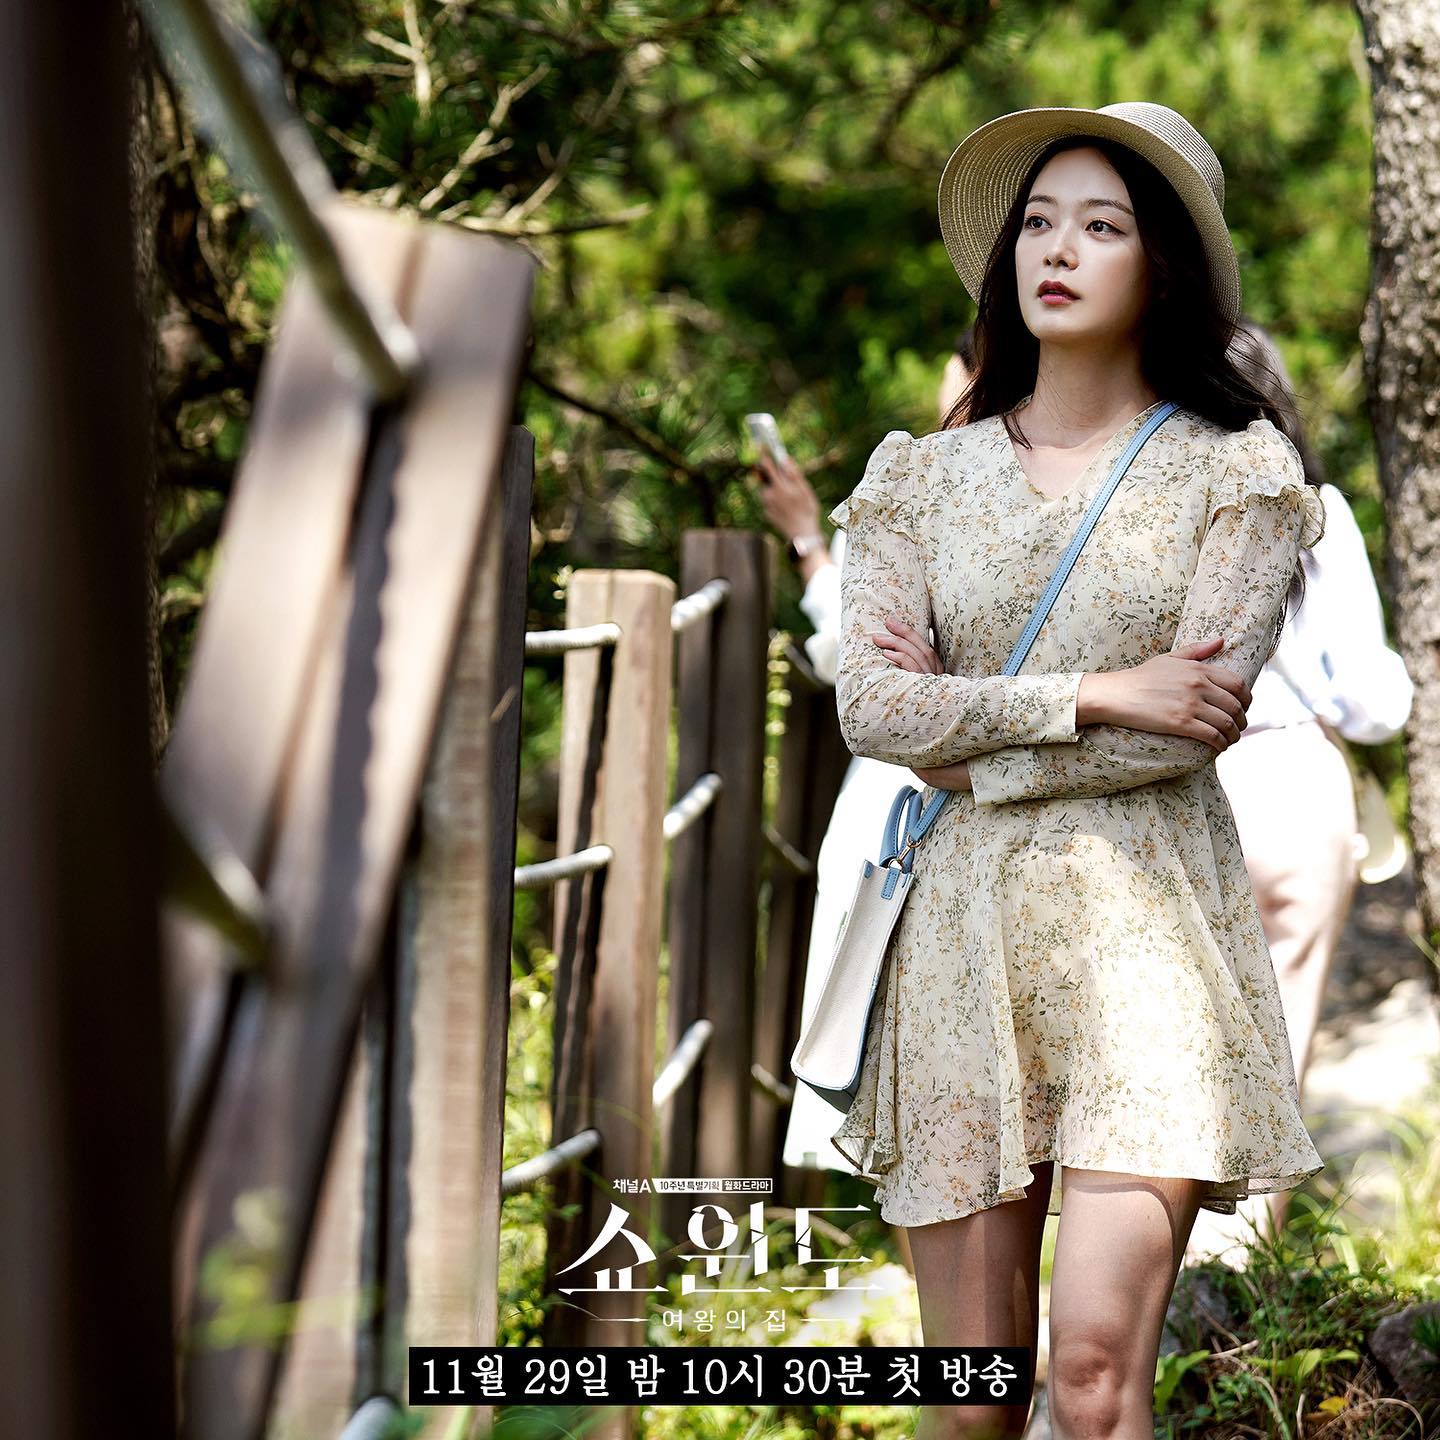 PJadi Pelakor Cantik, Jeon So Min Tampilkan Sisi Polos di Still Cuts Drama \'Show Window\'